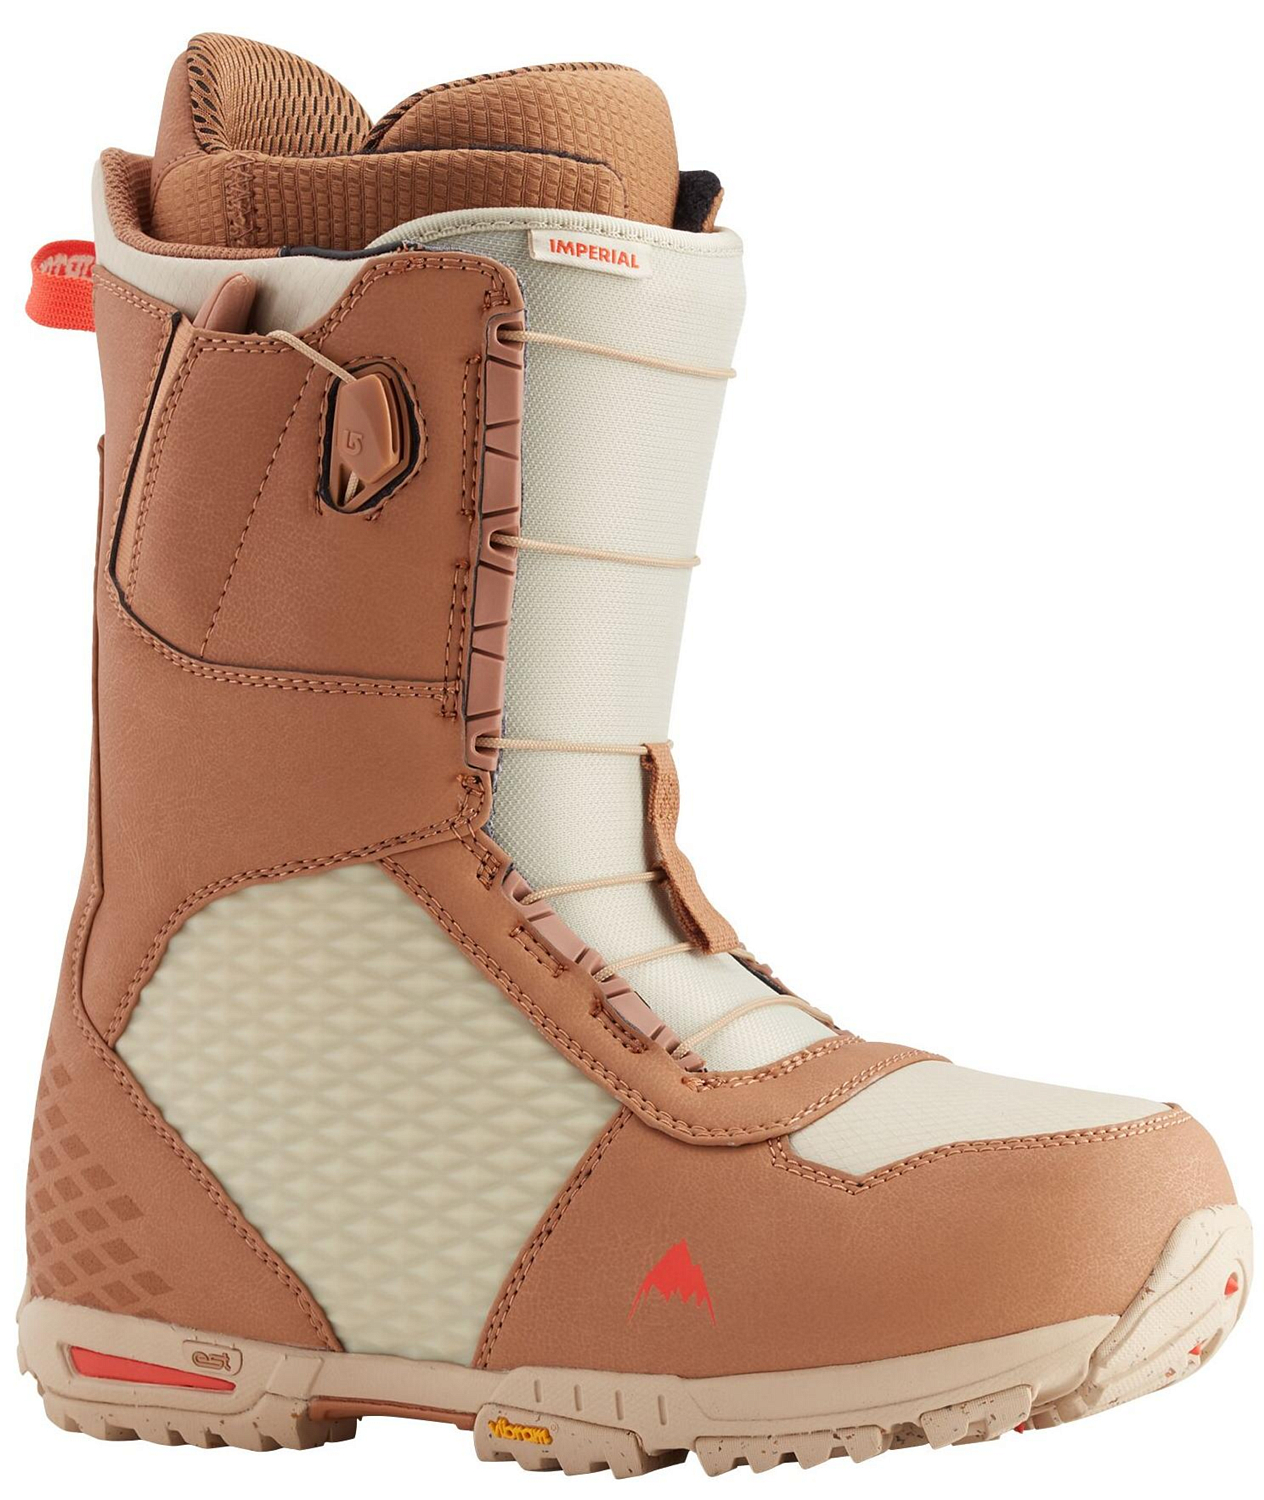 Ботинки для сноуборда BURTON 2020-21 Imperial Camel